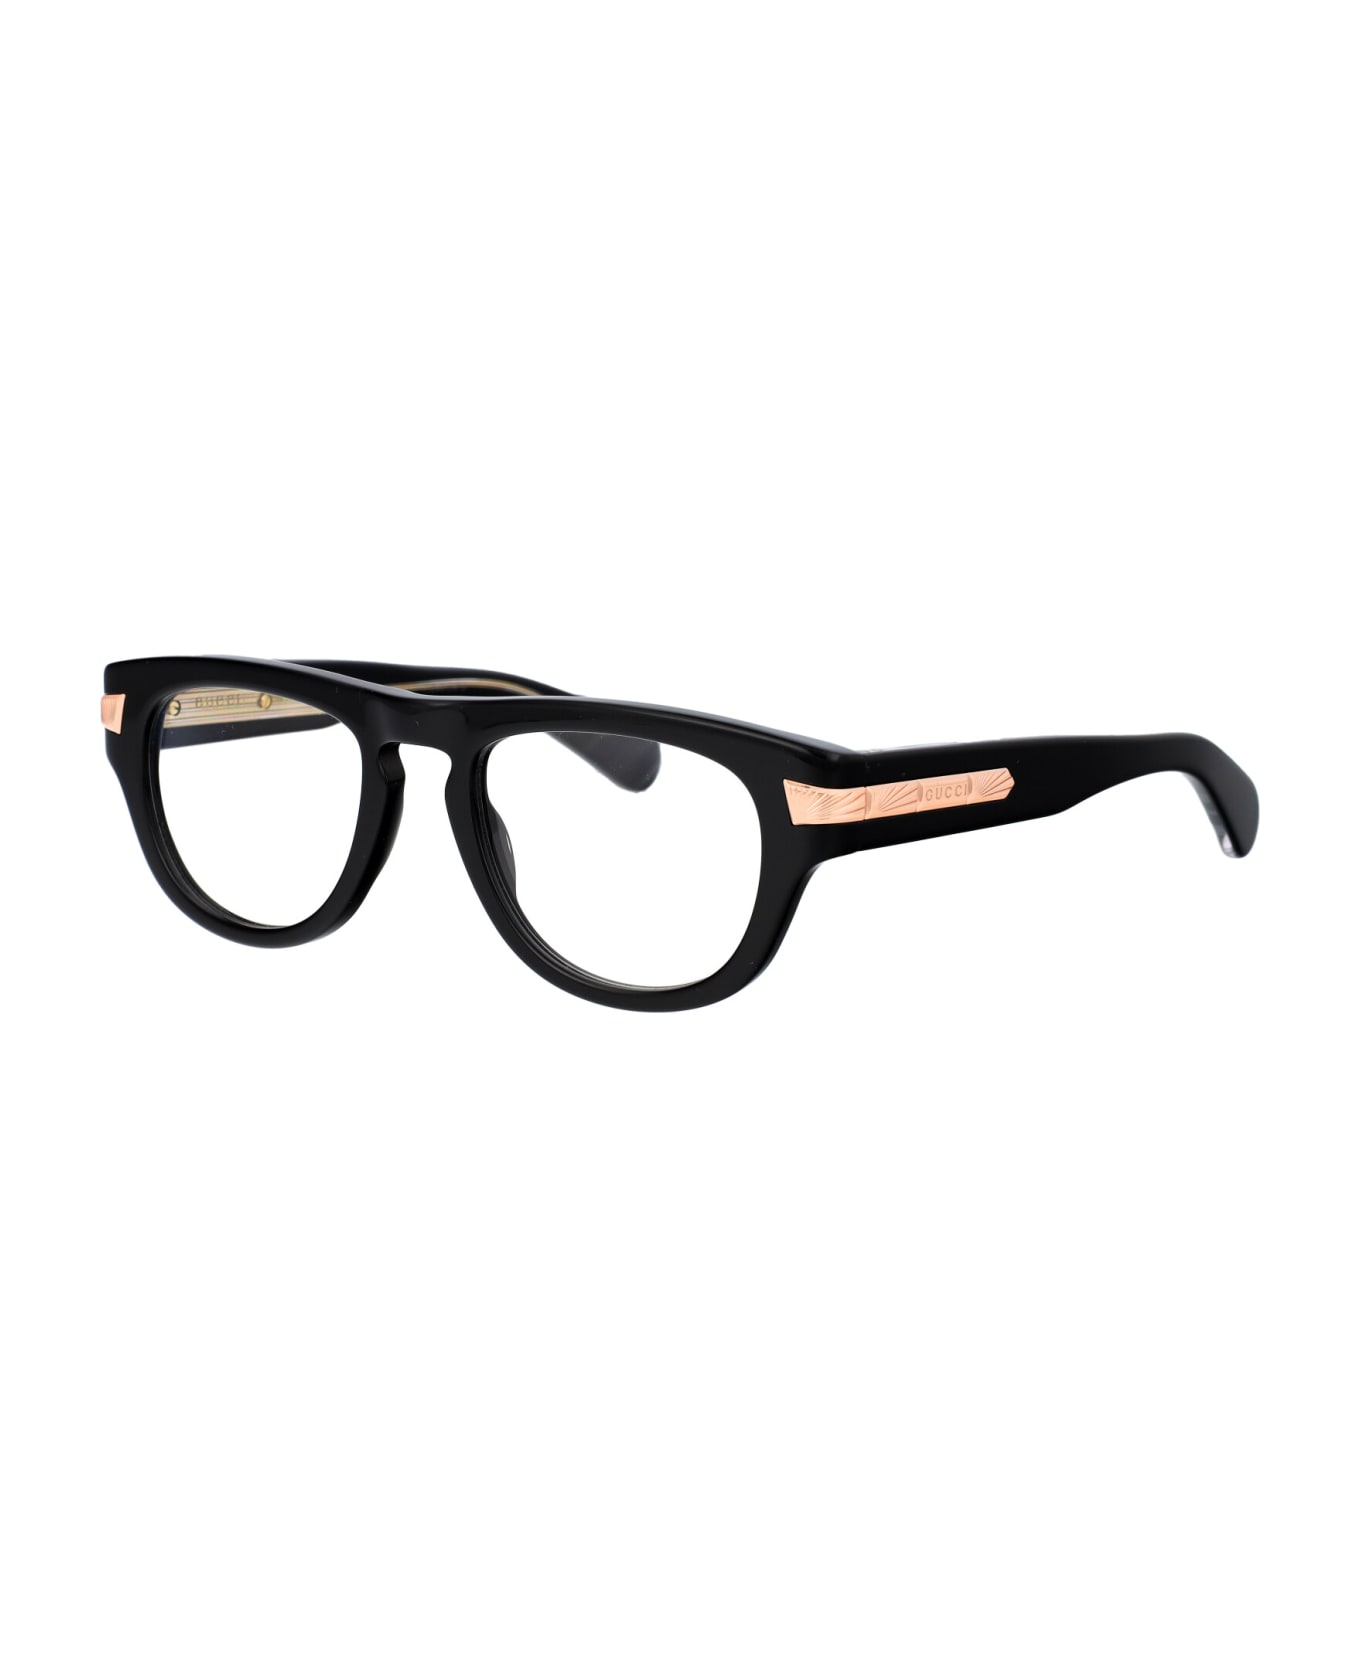 Gucci Eyewear Gg1519o Glasses - 001 BLACK BLACK TRANSPARENT